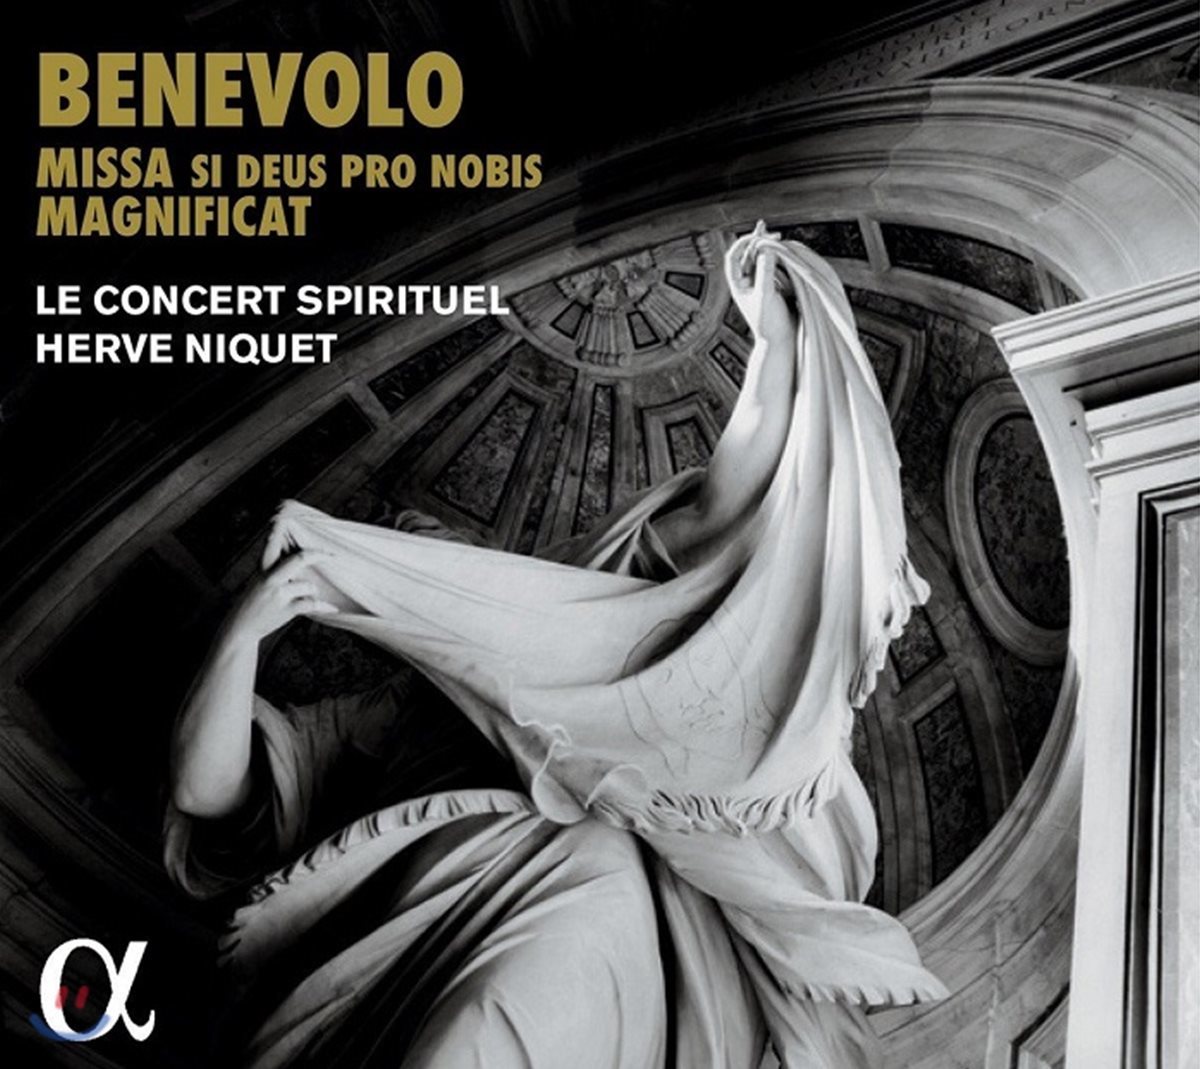 Herve Niquet 오라치오 베네볼로: 미사, 마그니피카트 (Orazio Benevolo: Missa Si Deus Pro Nobis, Magnificat)